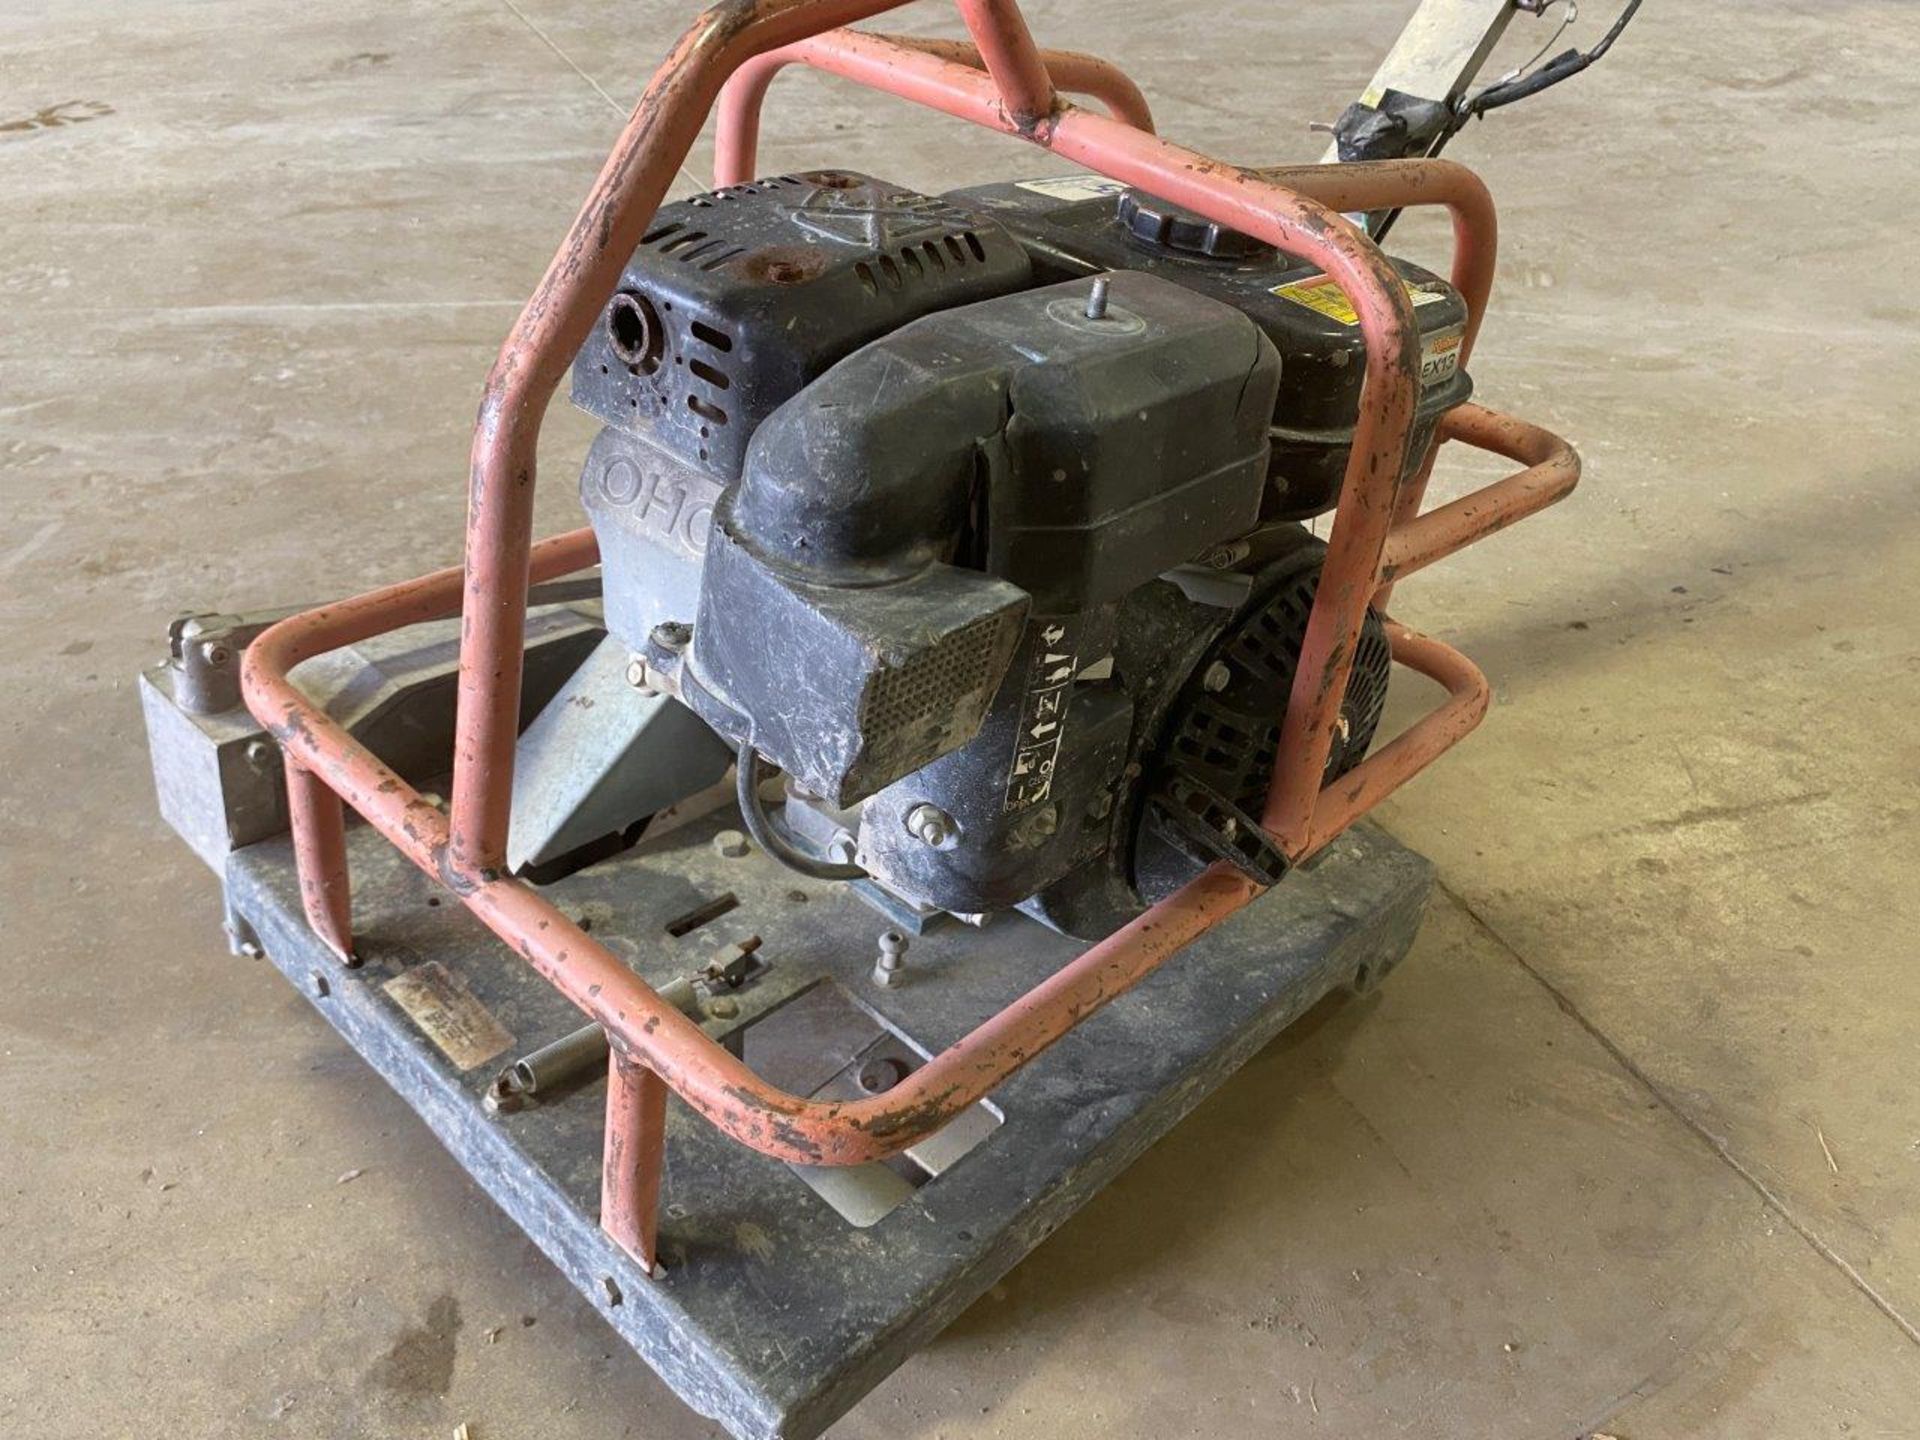 Soff Cut concrete saw, model x150, SN GO 1-282-811-900 Honda gas powered engine, manual start, - Image 4 of 6